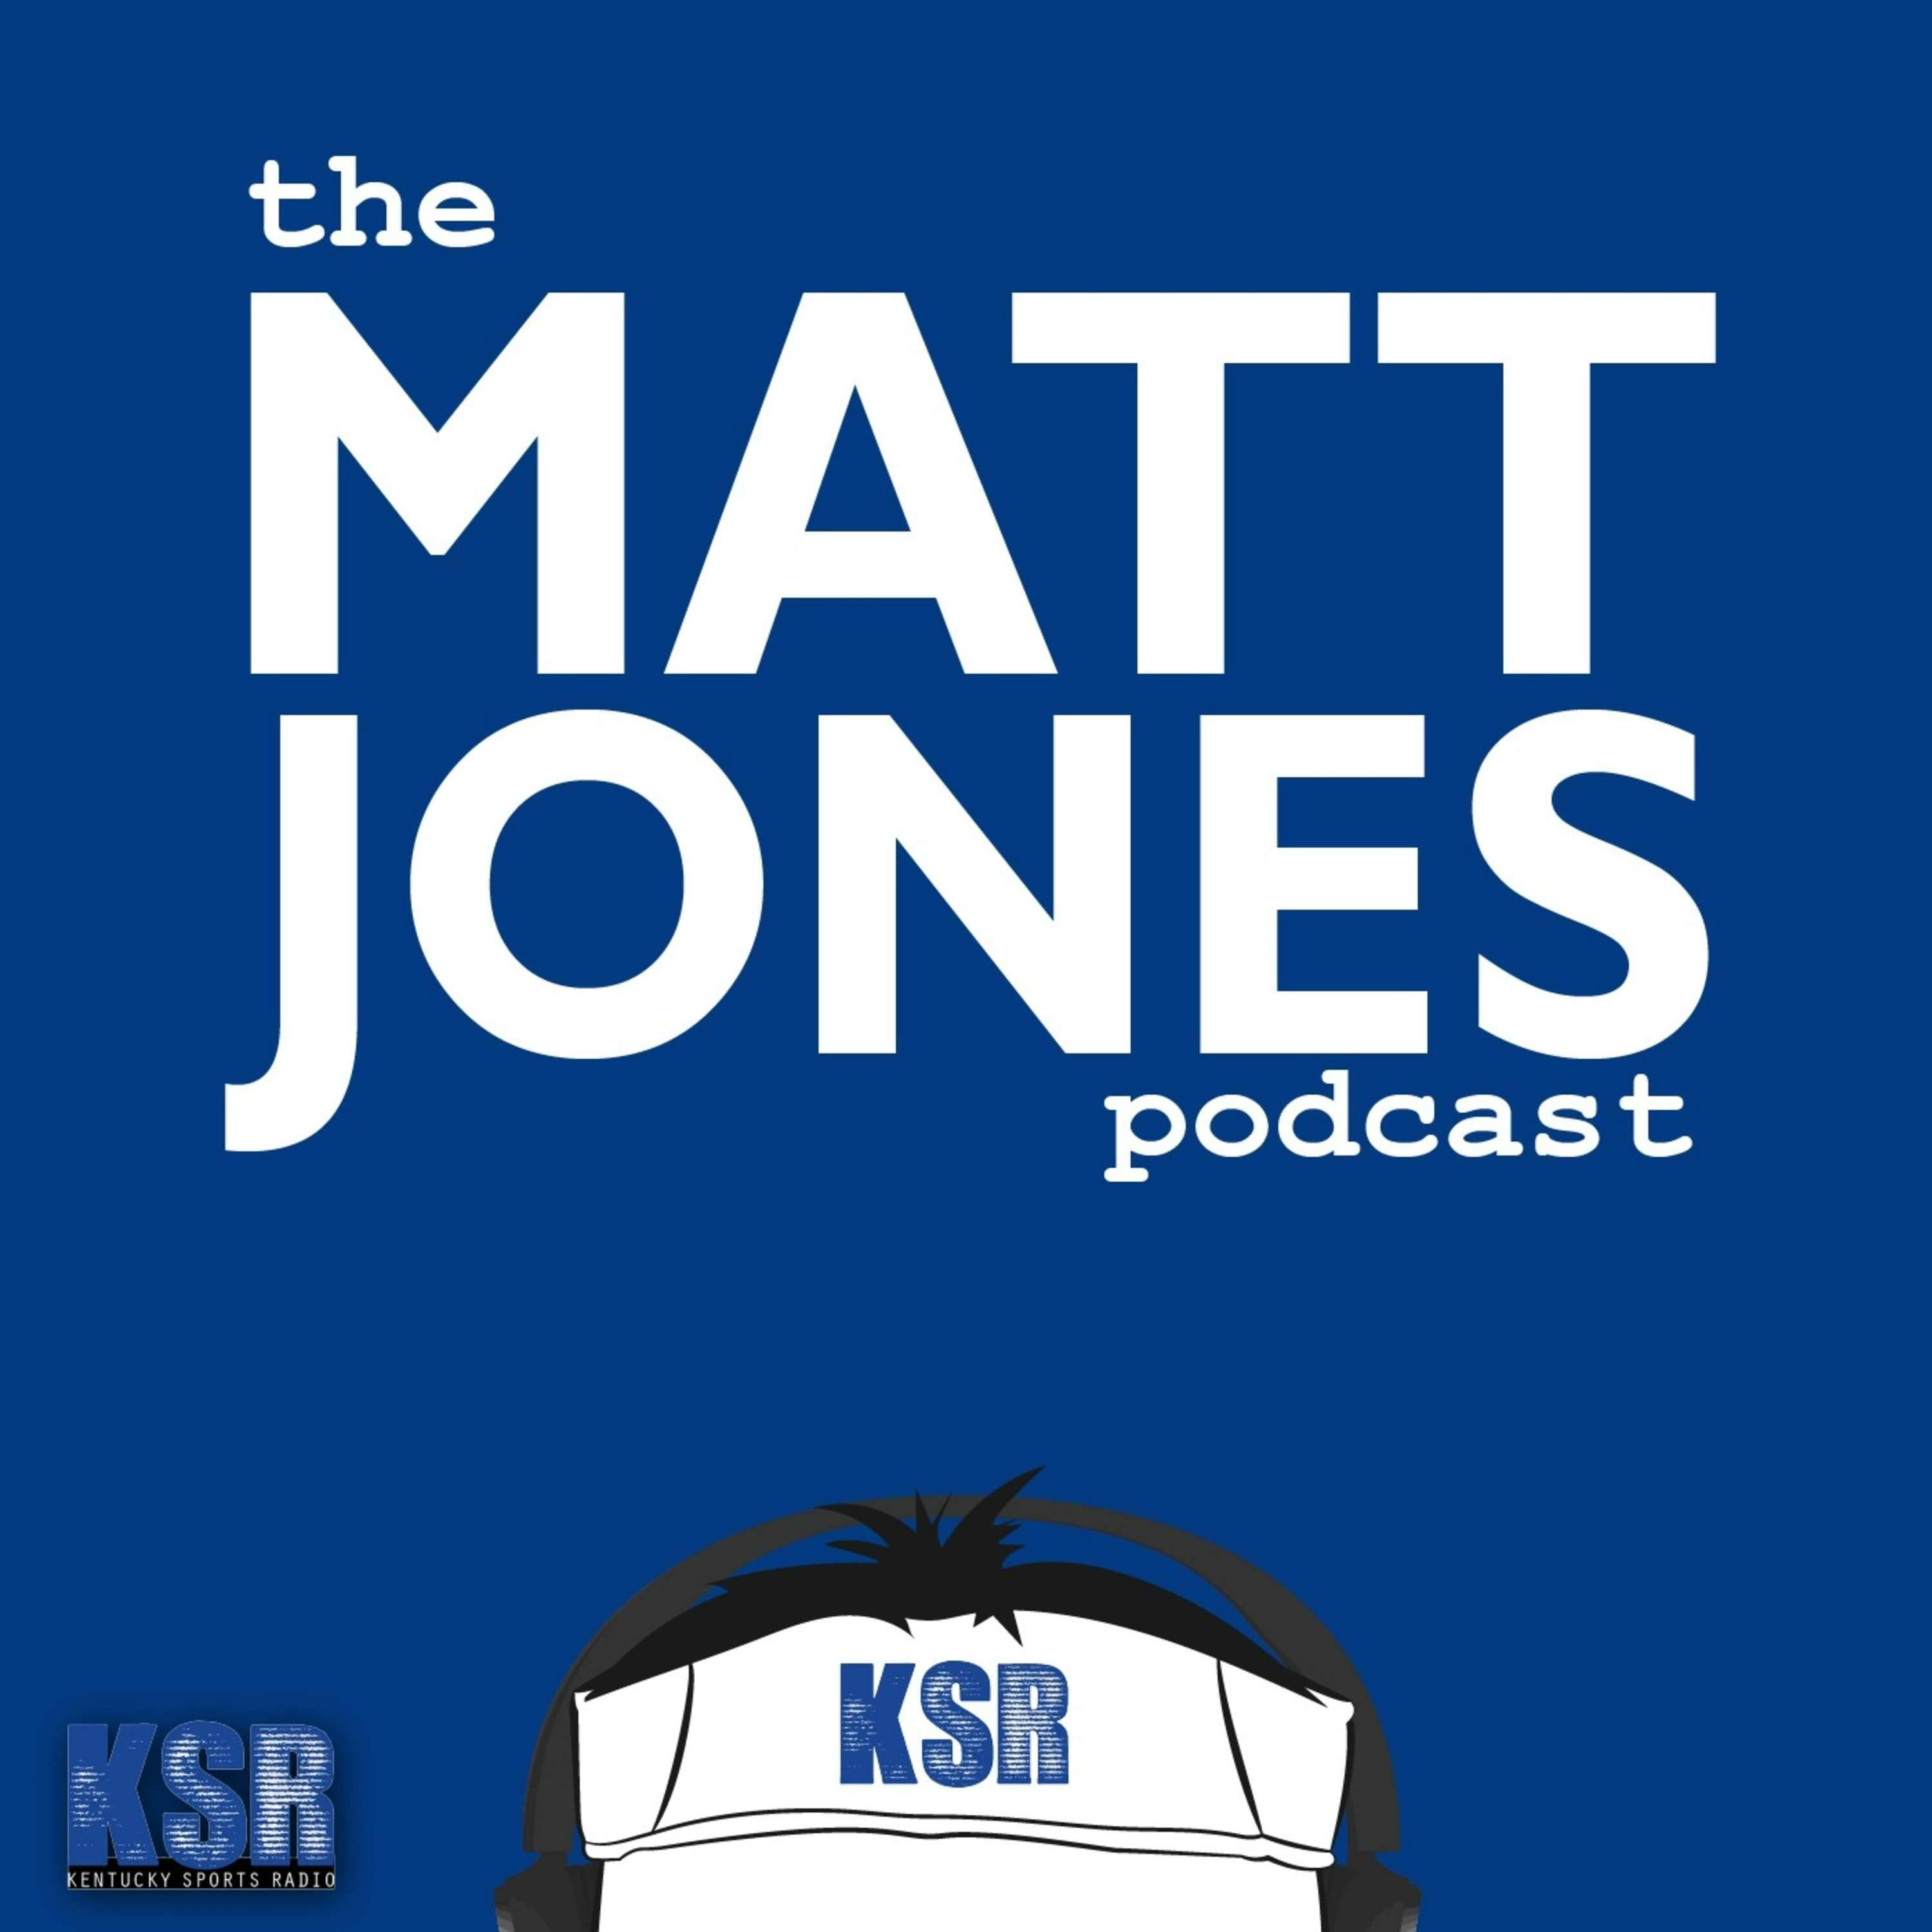 The Matt Jones Podcast: E52 Tony Vanetti & Dan Wolken